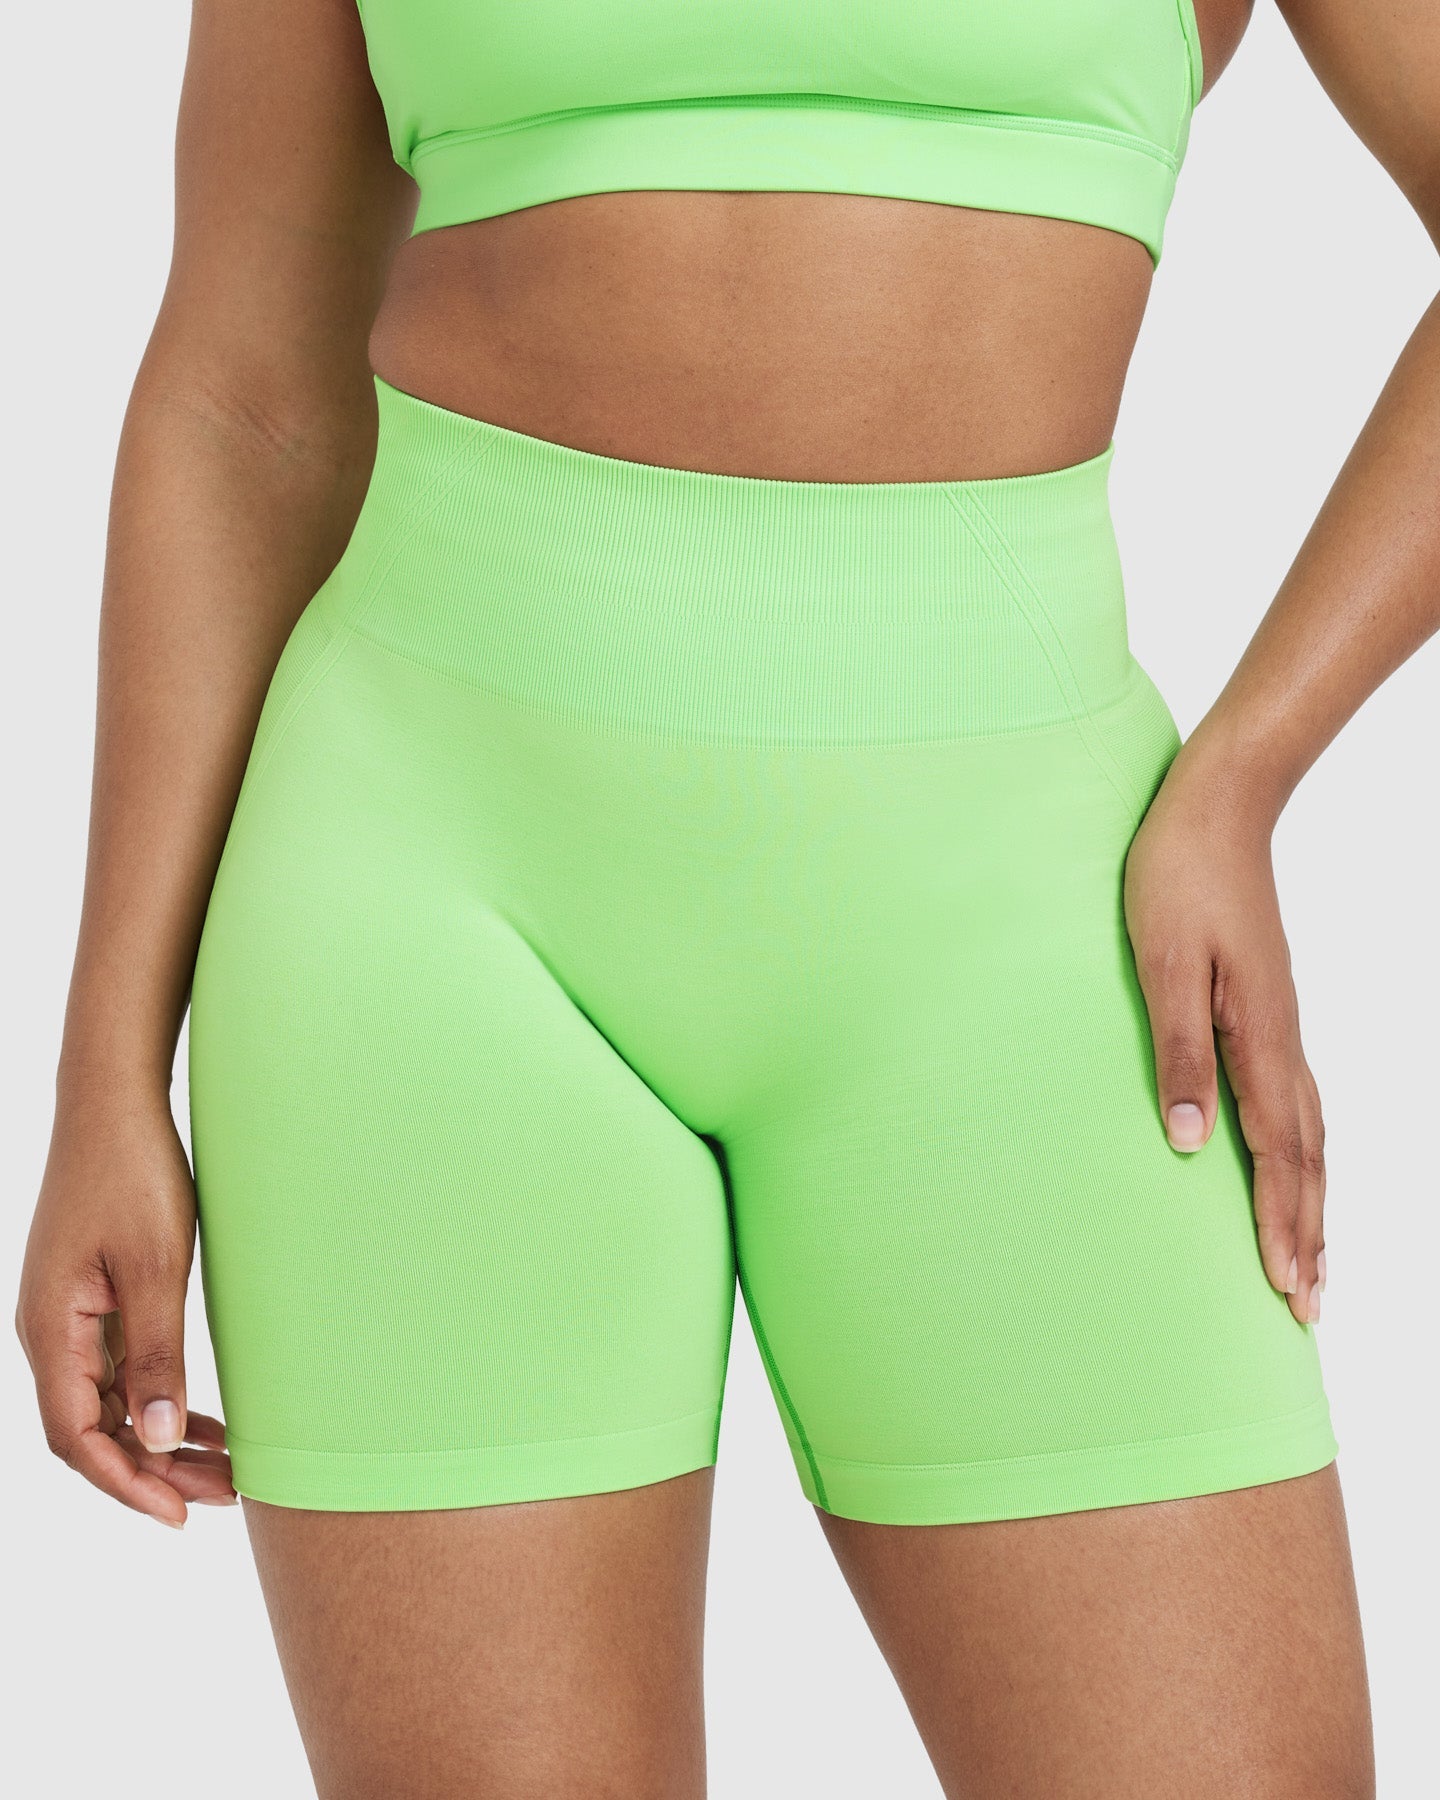 Everyday Highwaist Shorts in Apple Green V1 #6stylexclusive